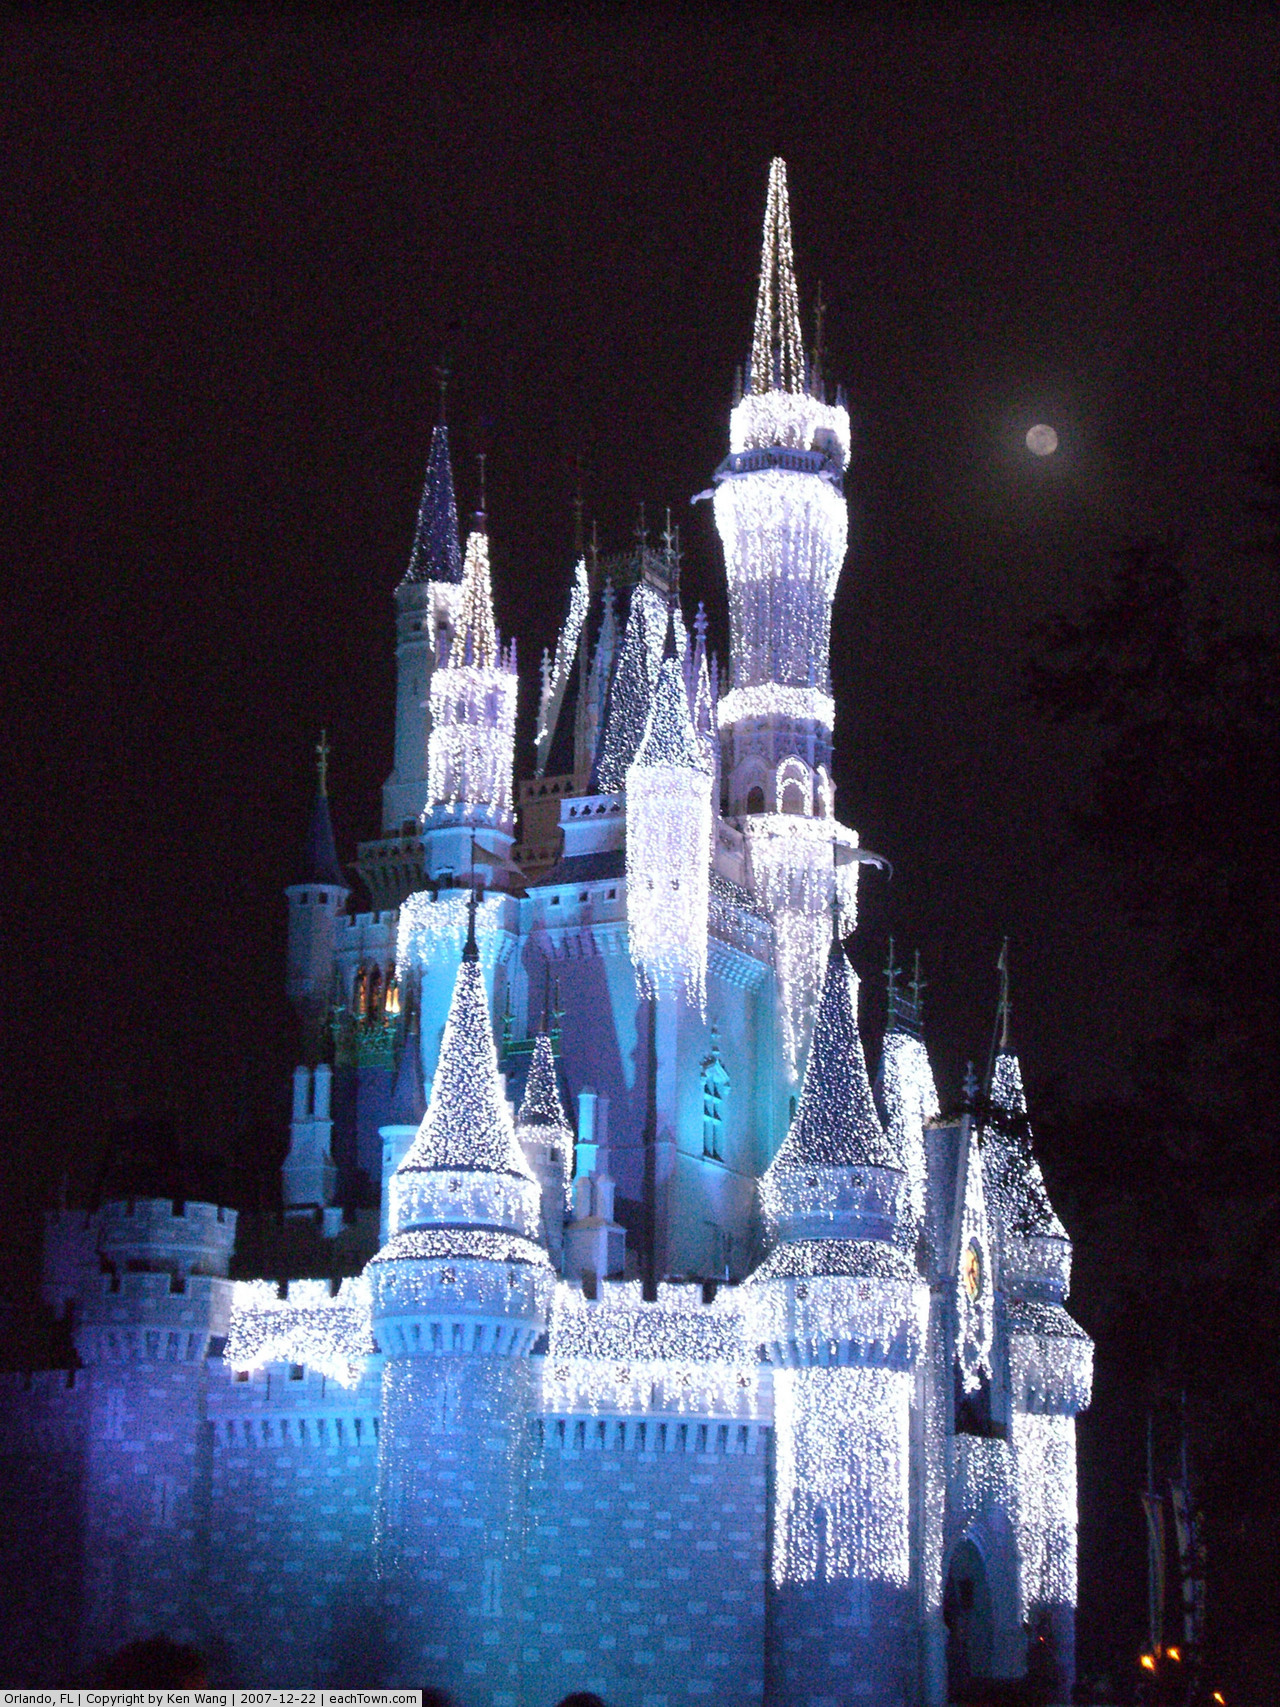  - Cinderella's castle, Disney's Magic Kingdom theme park